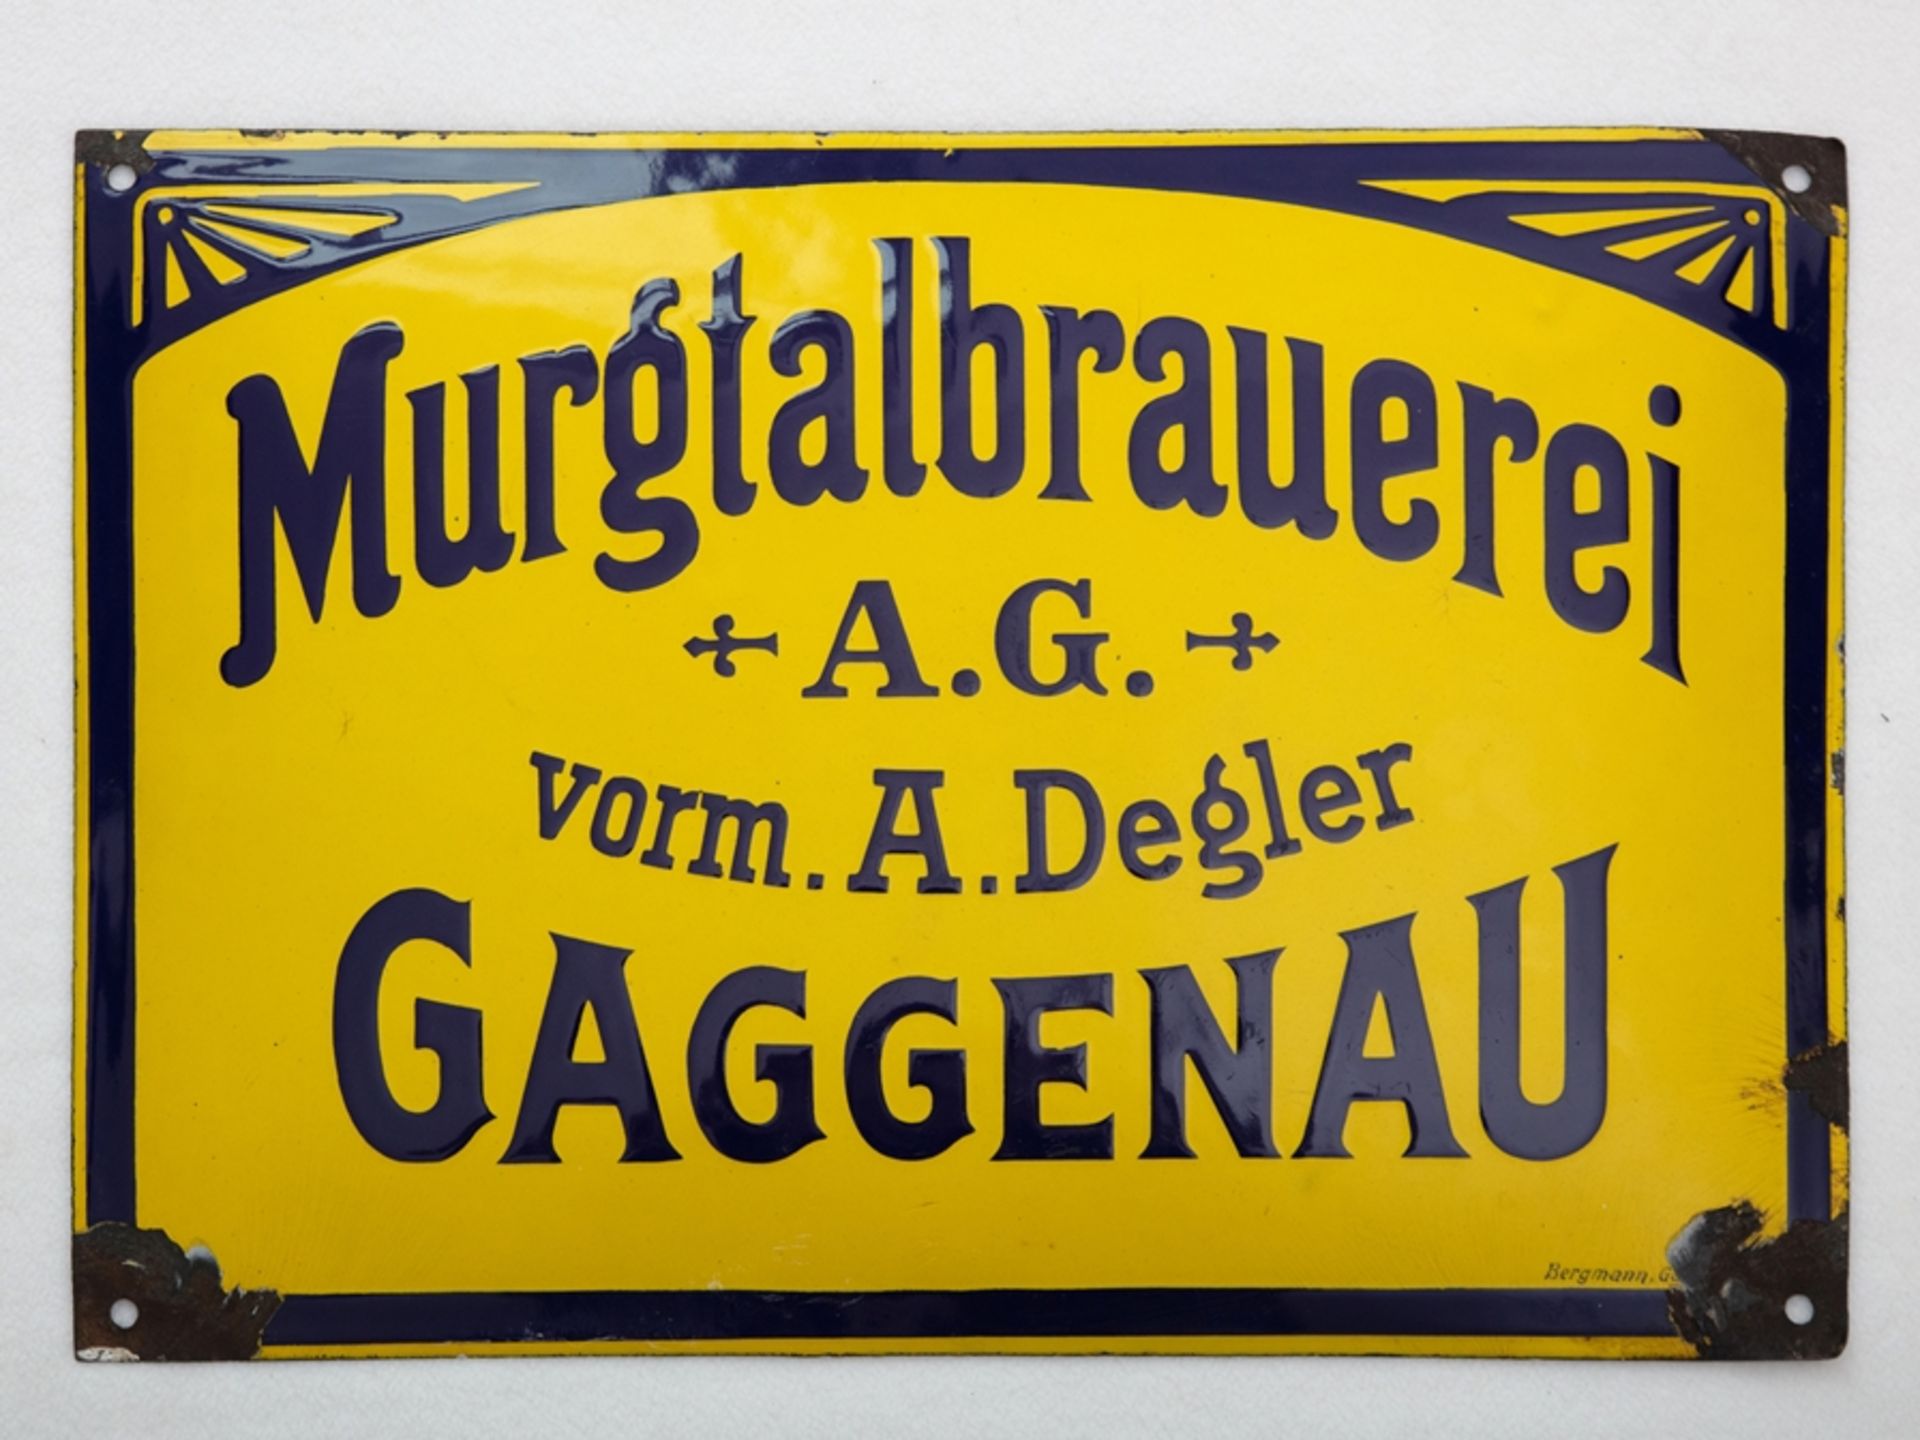 Enamel sign Murgtalbrauerei vorm. A.Degler, Art Nouveau, Gaggenau, around 1910  - Image 7 of 7